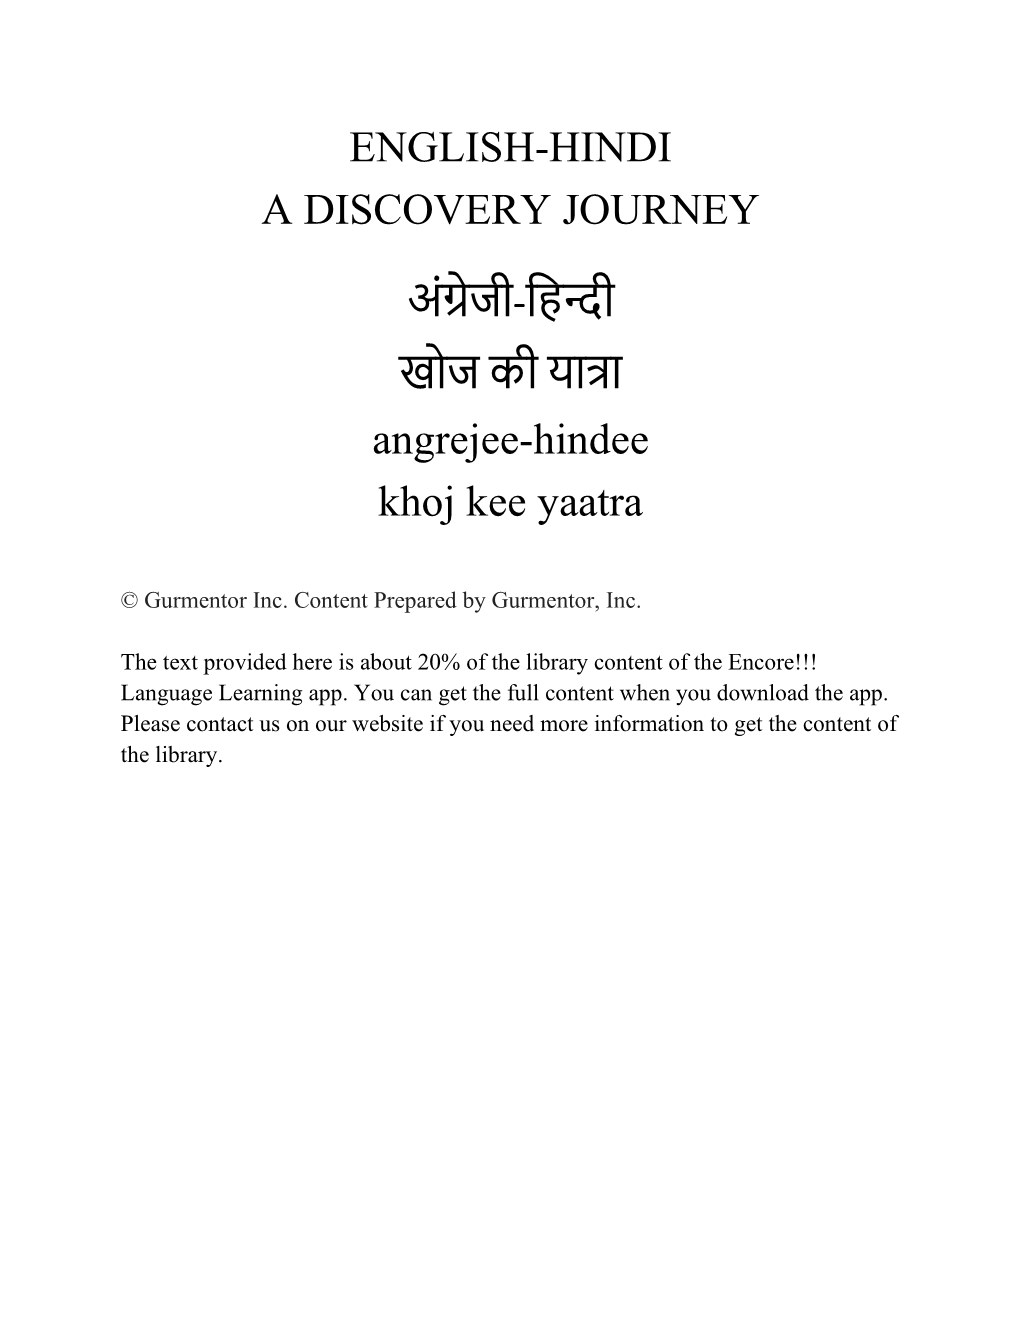 English-Hindi a Discovery Journey अंग्रेजी-िह ी खोज की